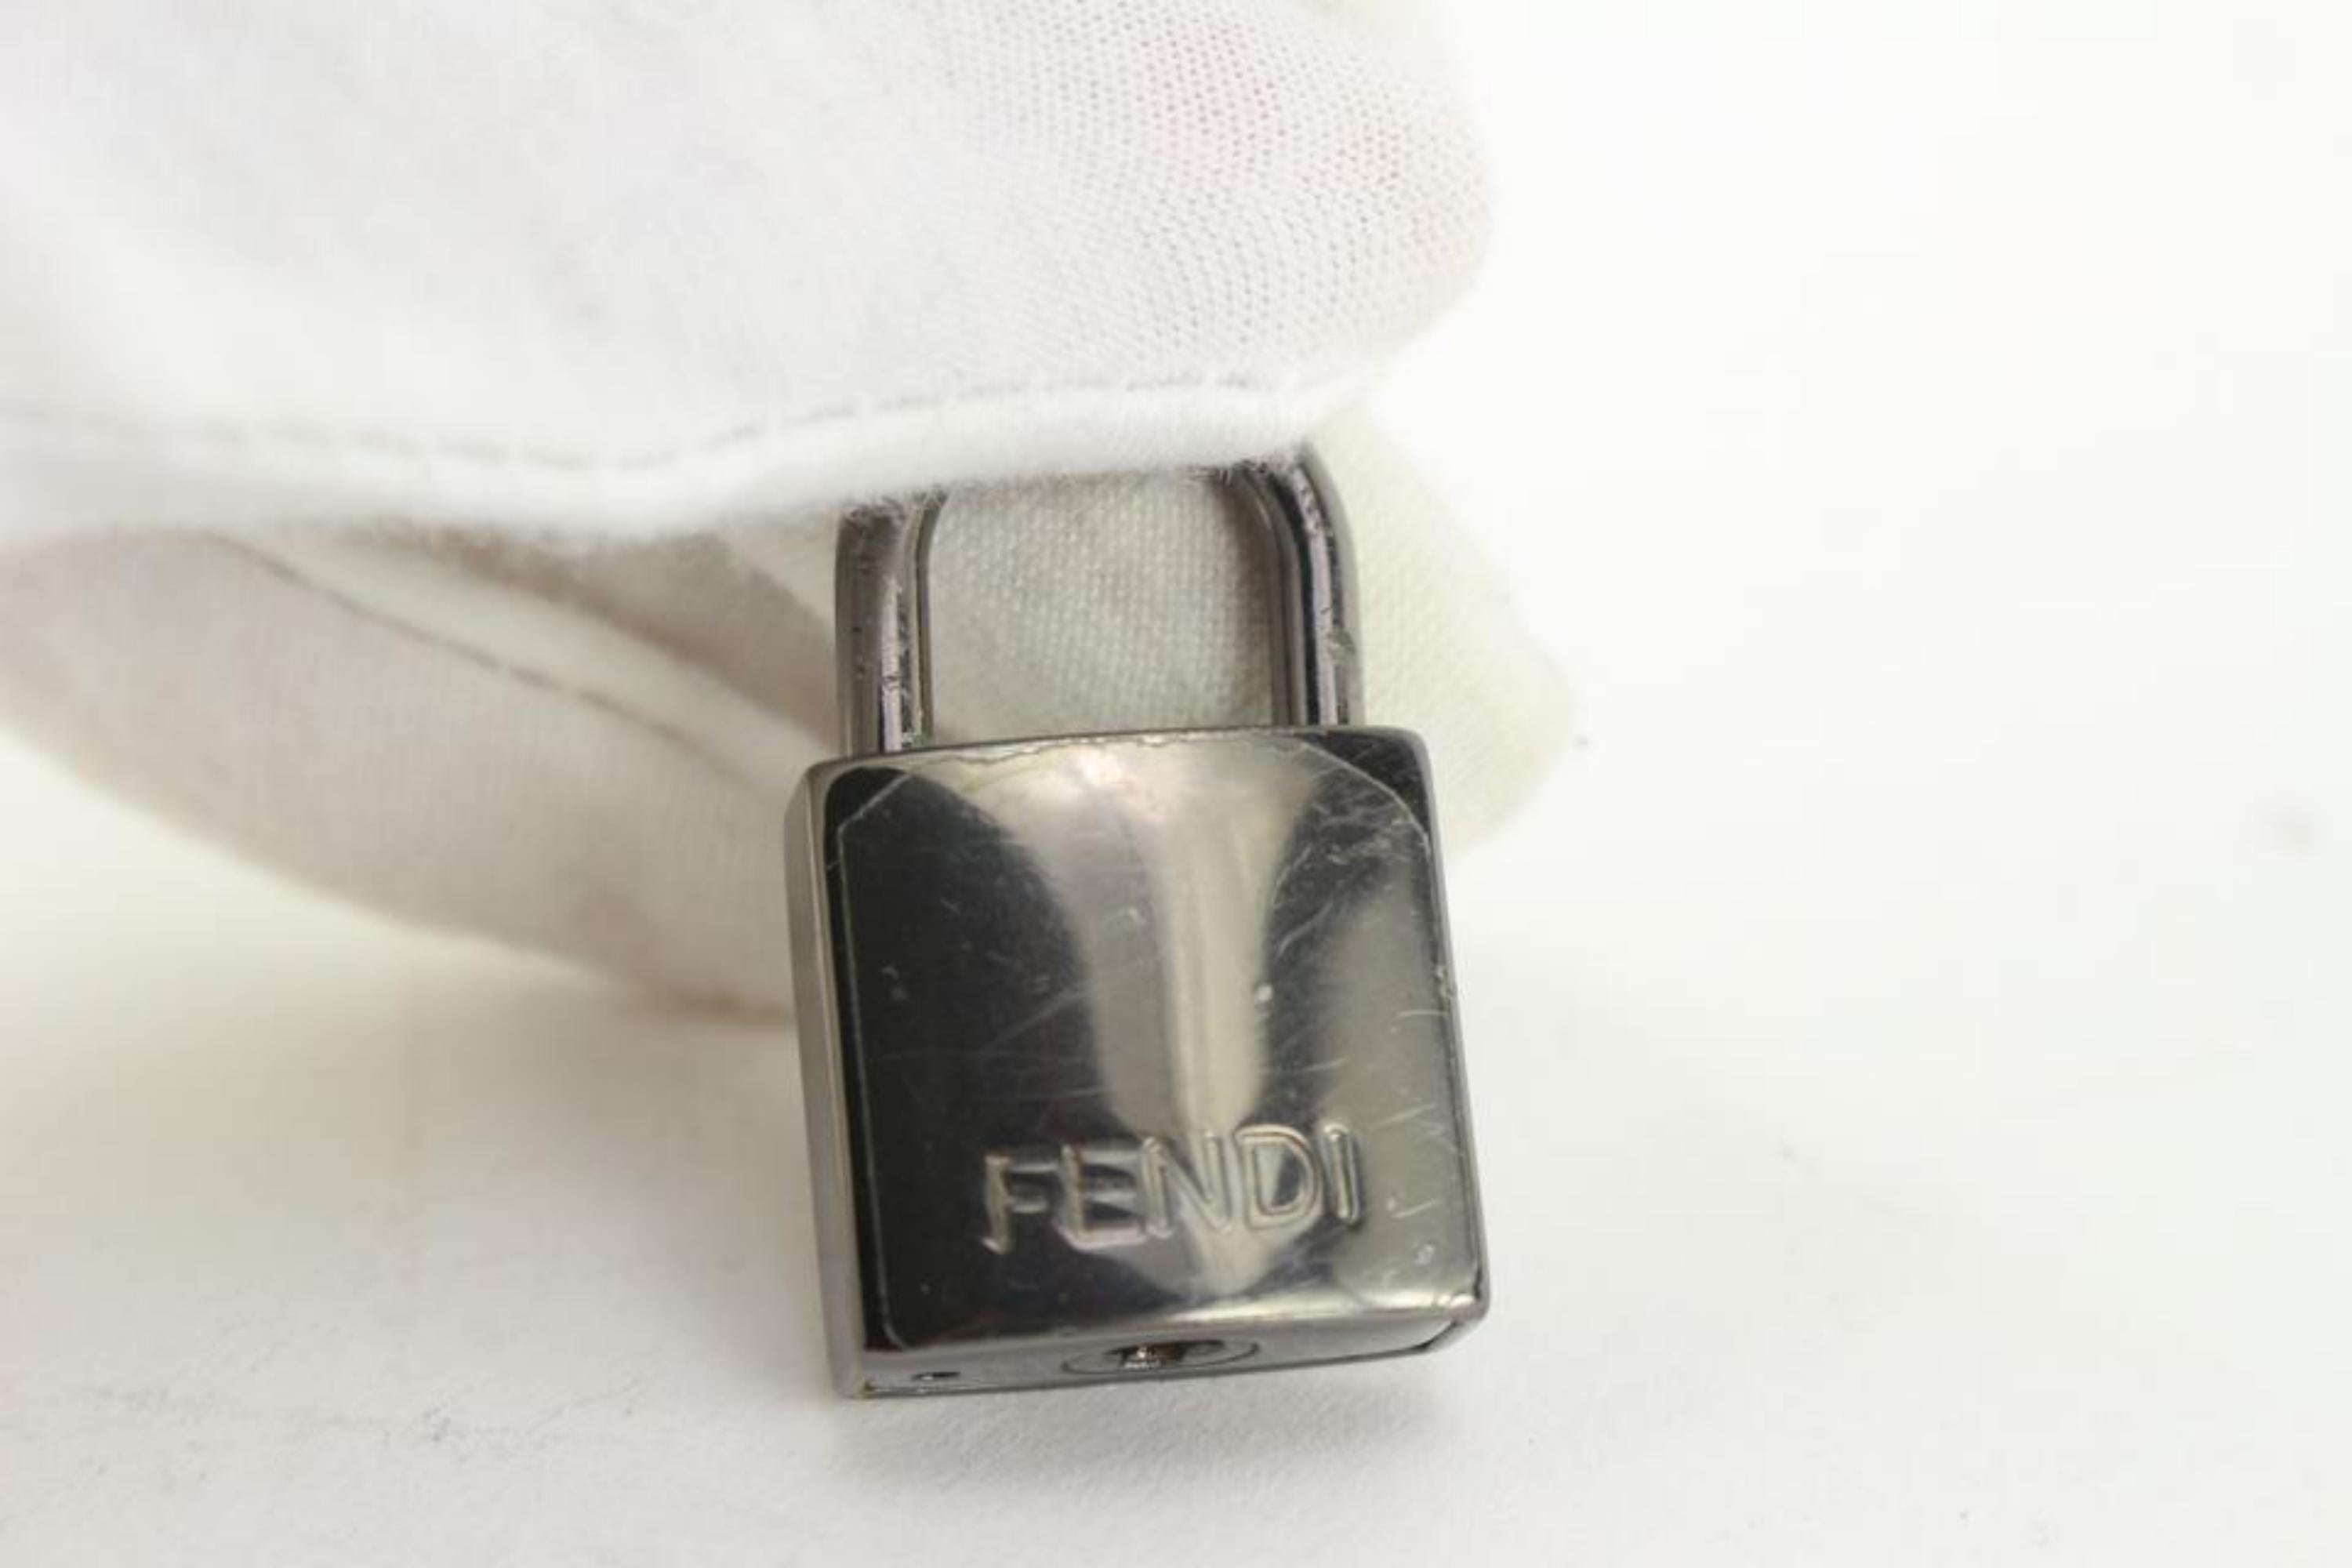 Fendi FF Logo Padlock and Key Lock Set Bag Charm 126f48 4